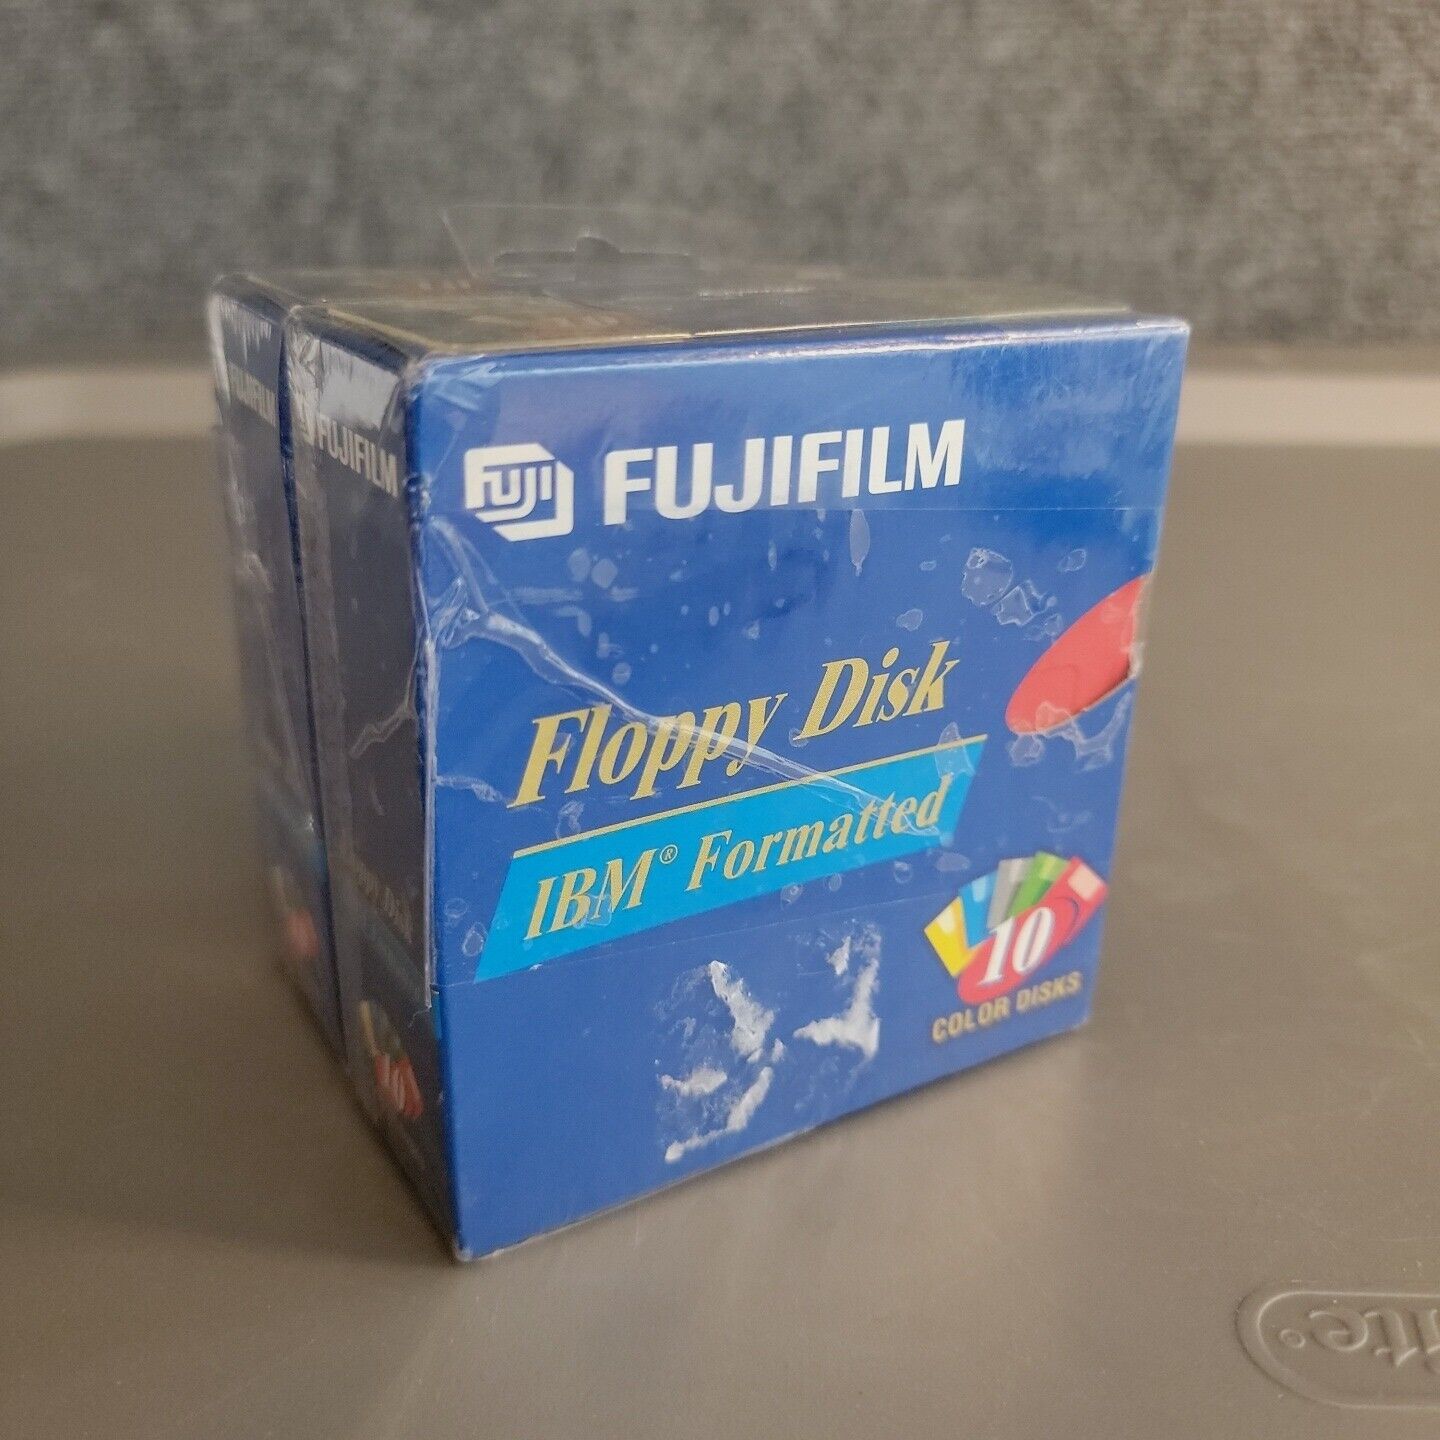 2 TEN PACKS (20) Fujifilm Floppy Disk 2HD IBM 3.5” Color Formatted Disks Sealed 